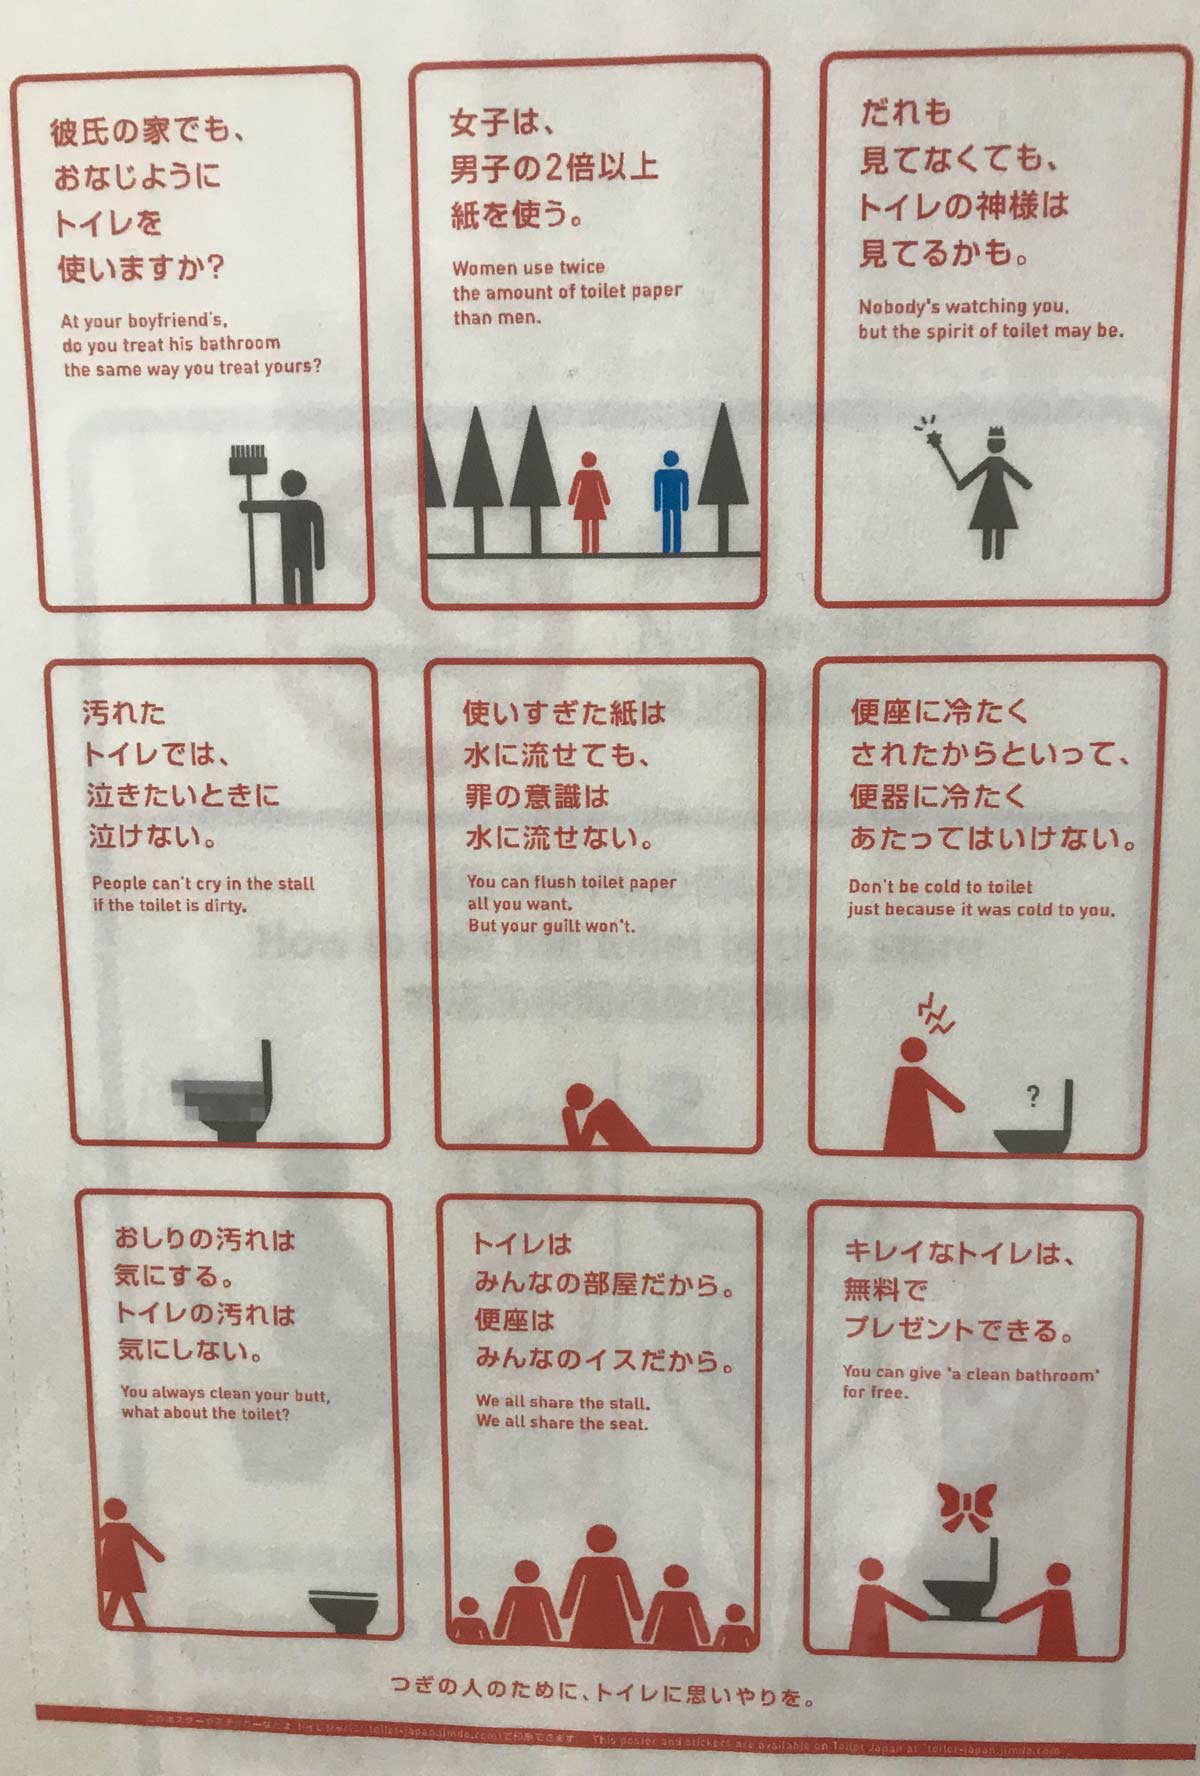 Public toilet sign in Japan